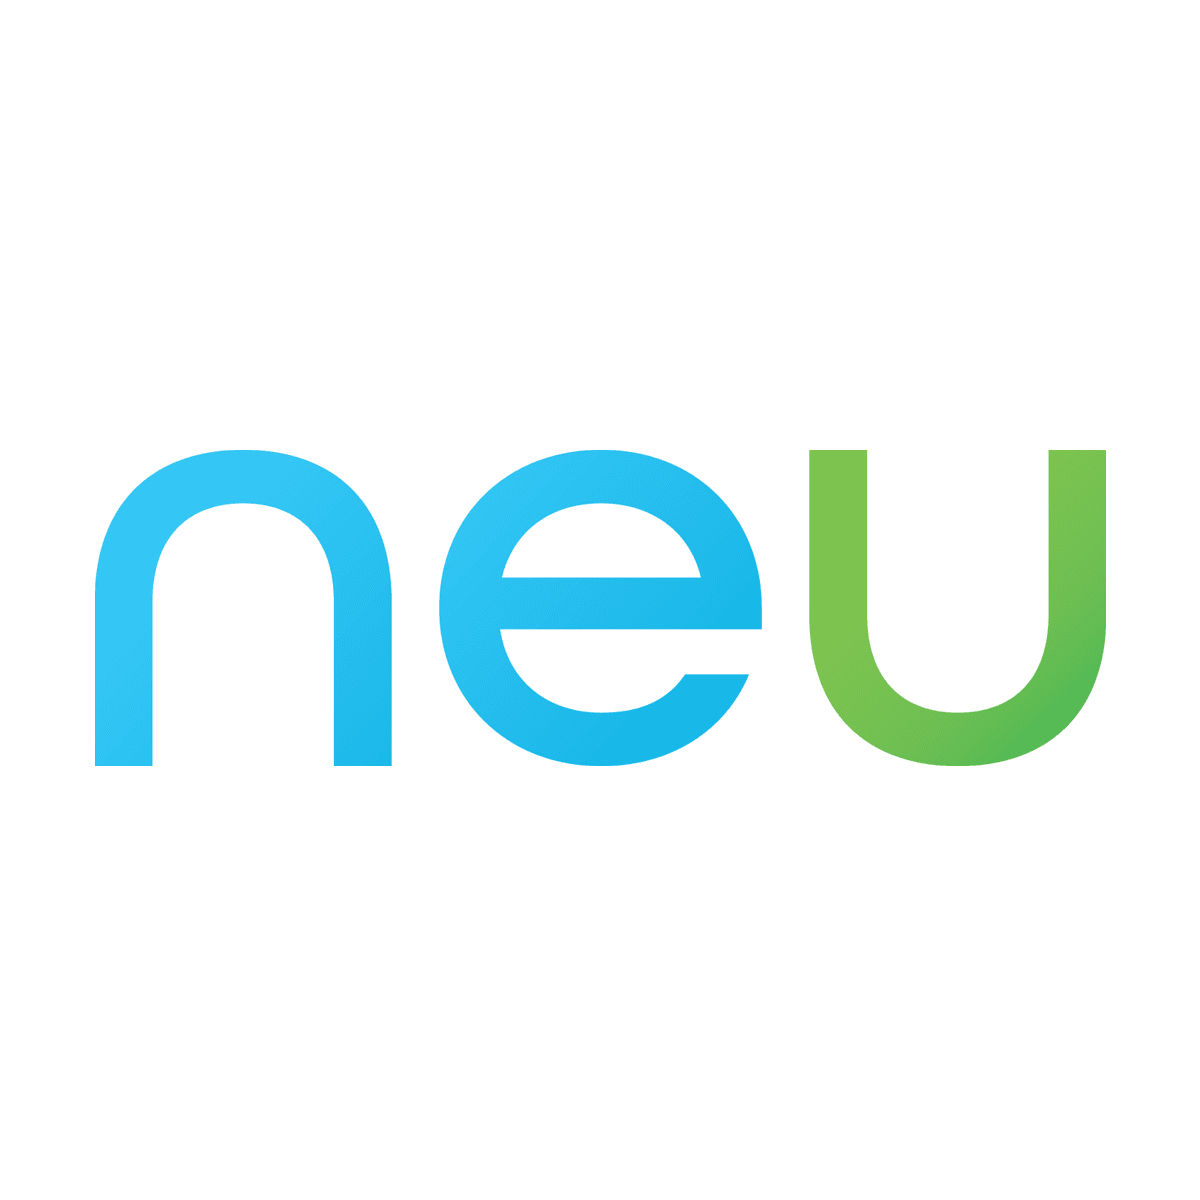 neu logo